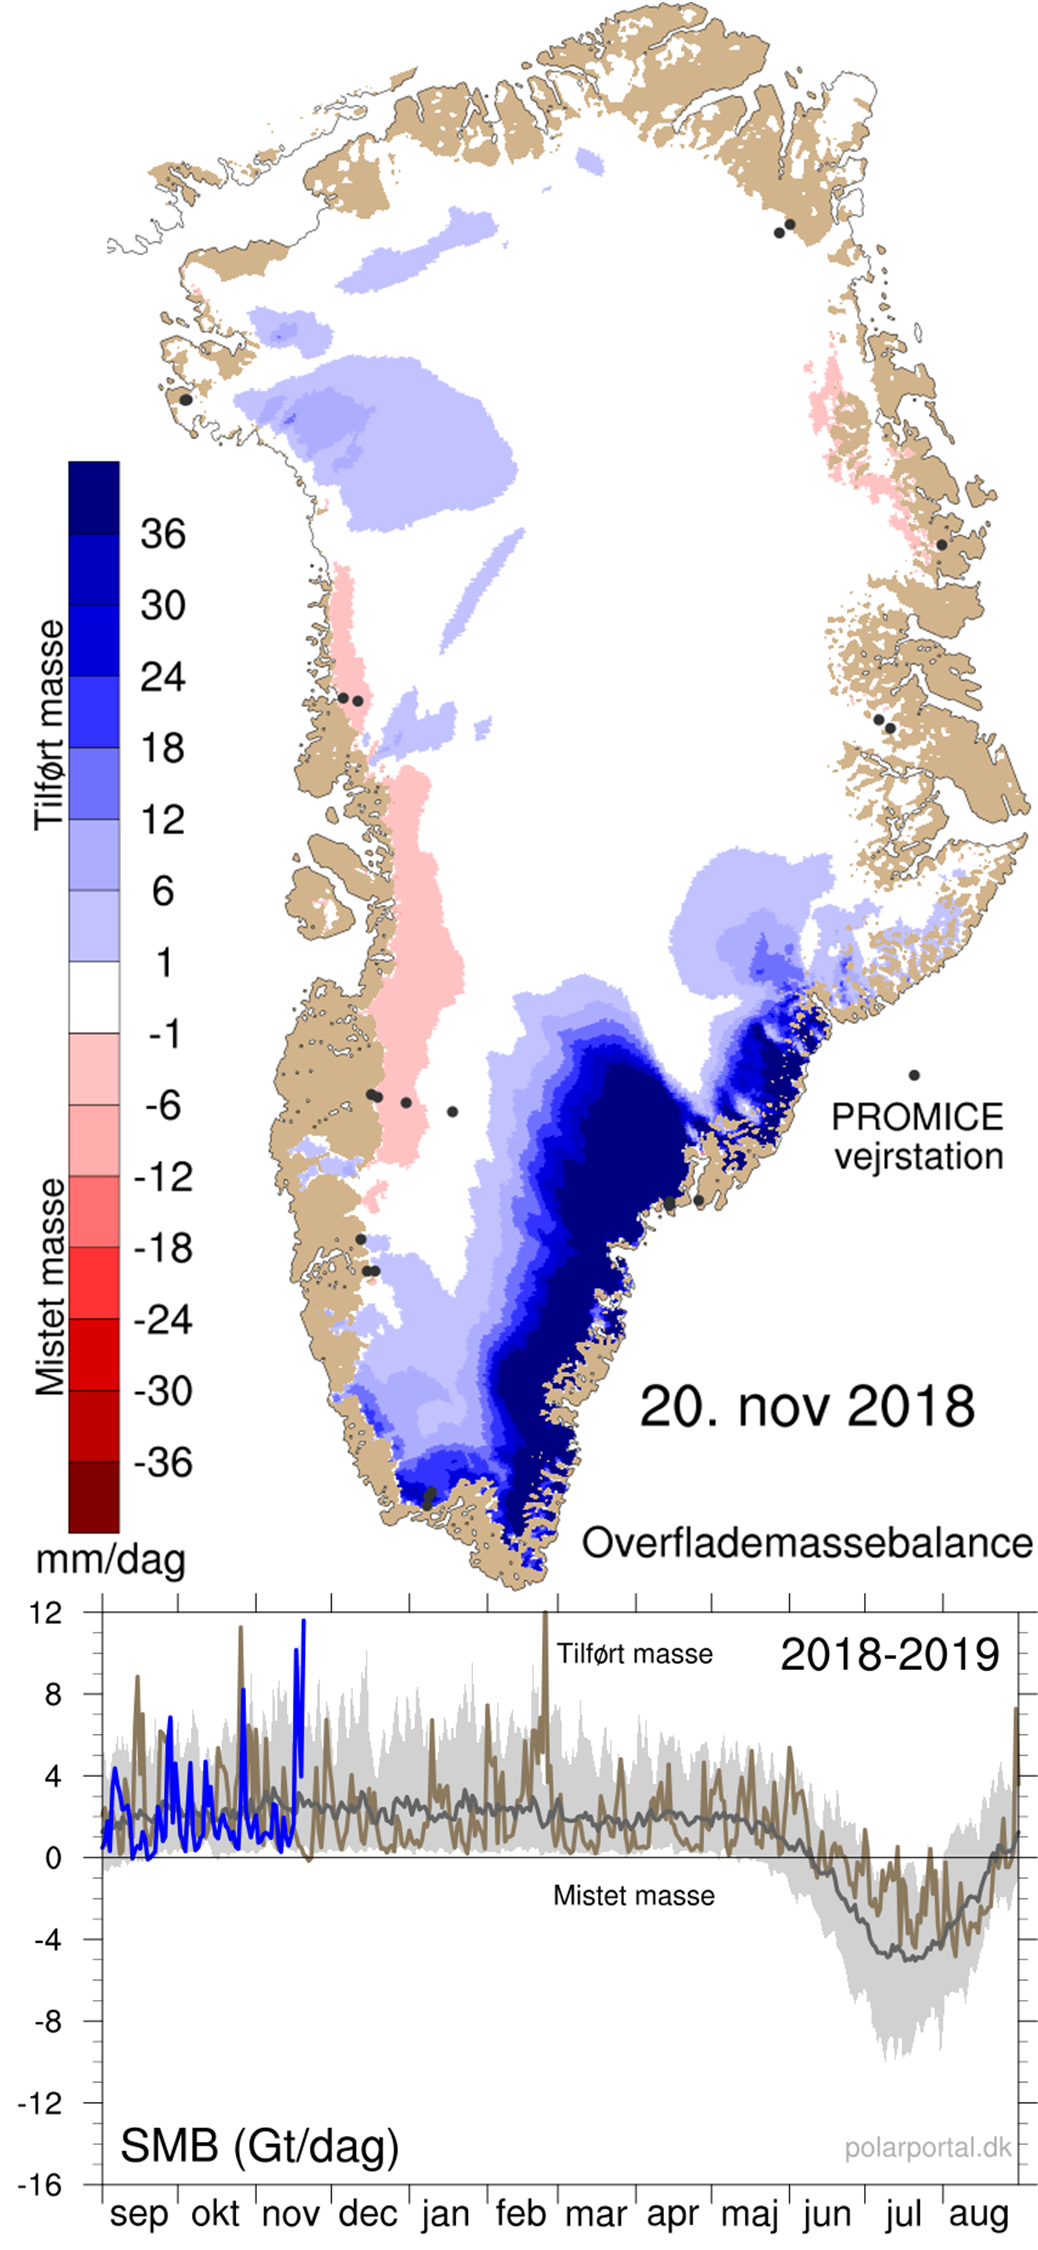 Overflademassebalancen over Grønland